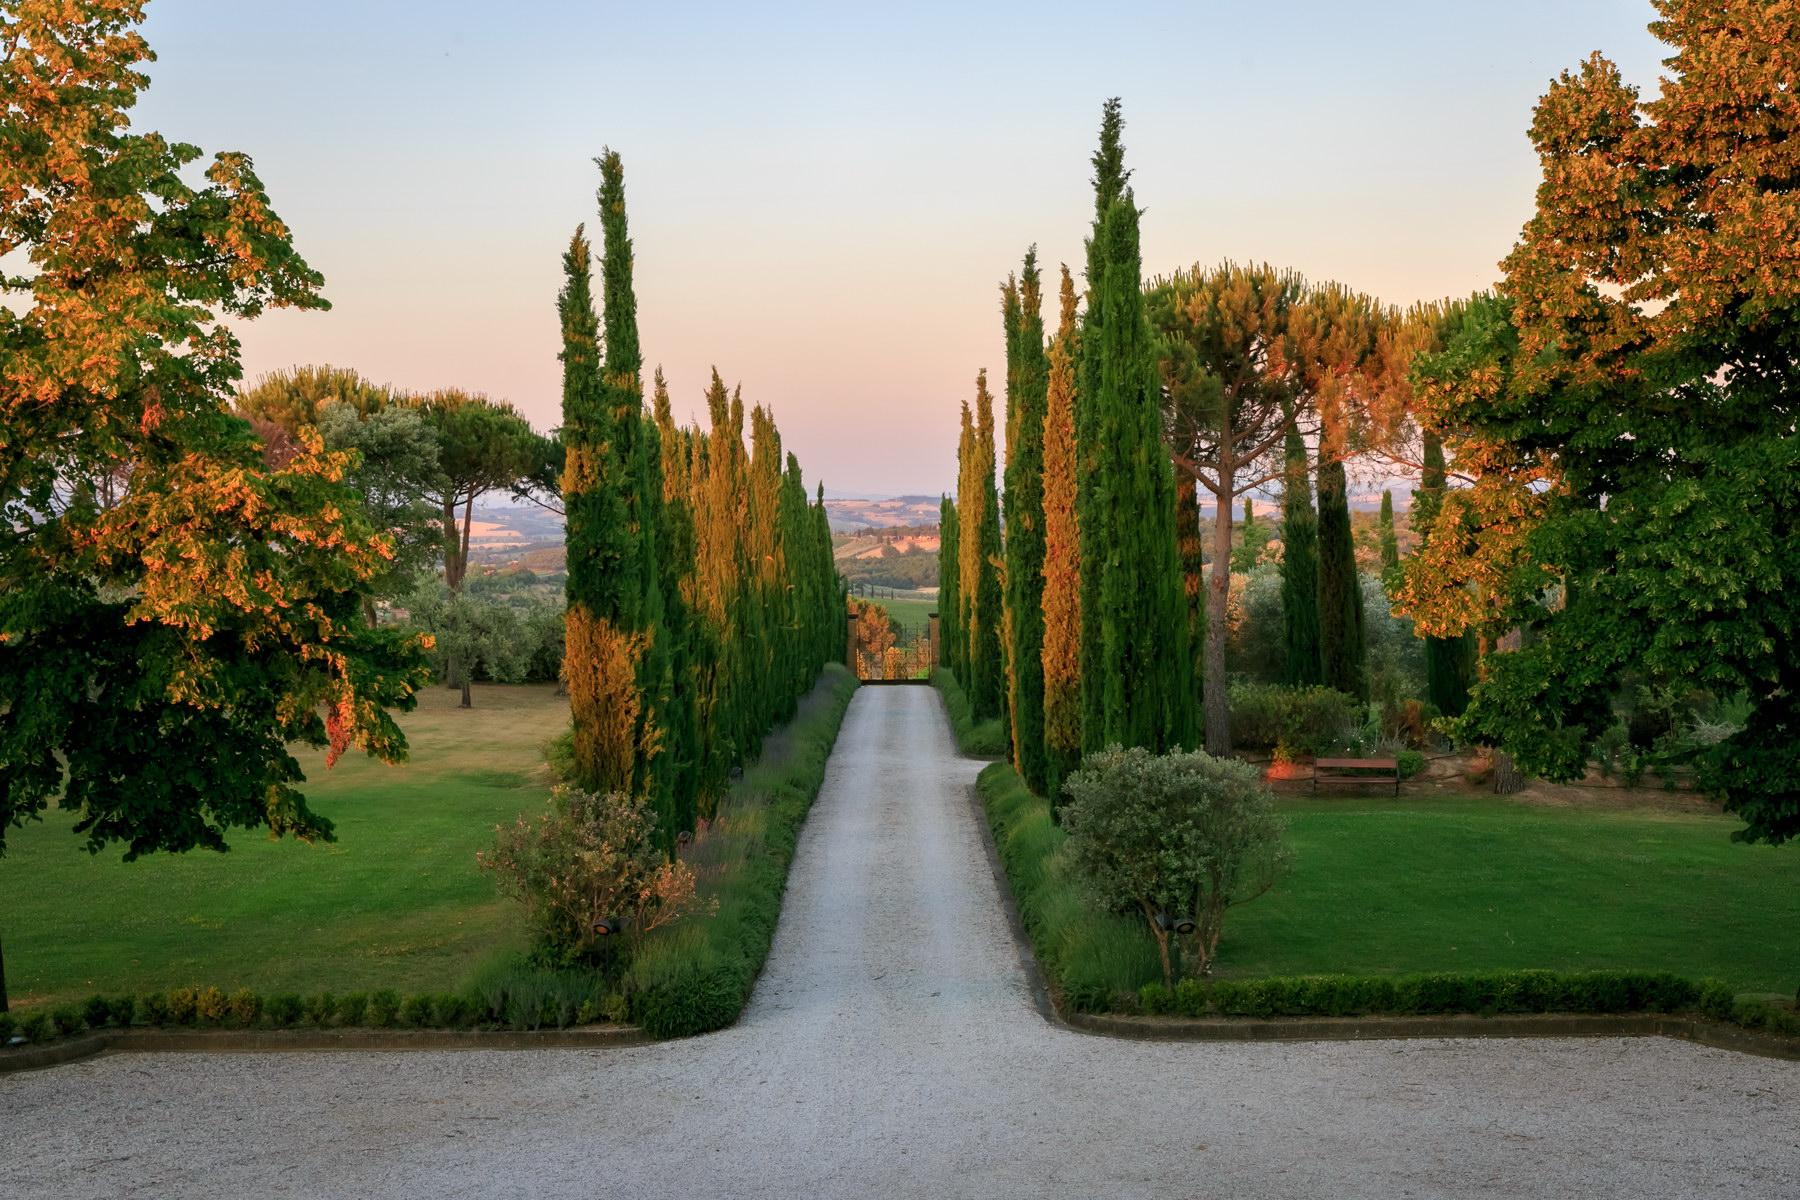 Merveilleuse villa immergée parmi les vignobles de Montepulciano - 3